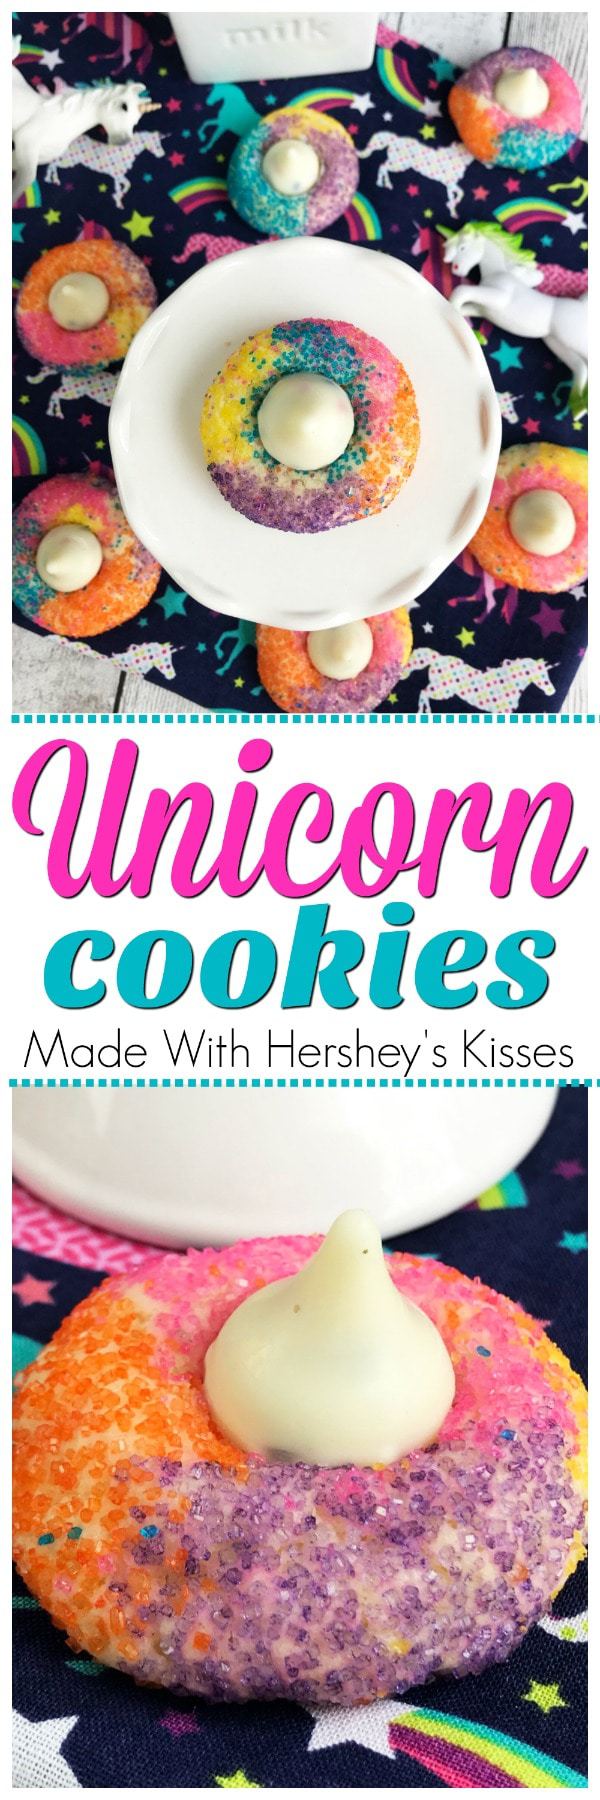 Unicorn Cookies, Unicorn Kiss Cookies, Unicorn Dessert, Unicorn birthday themed party, unicorn magical cookies, unicorn recipes